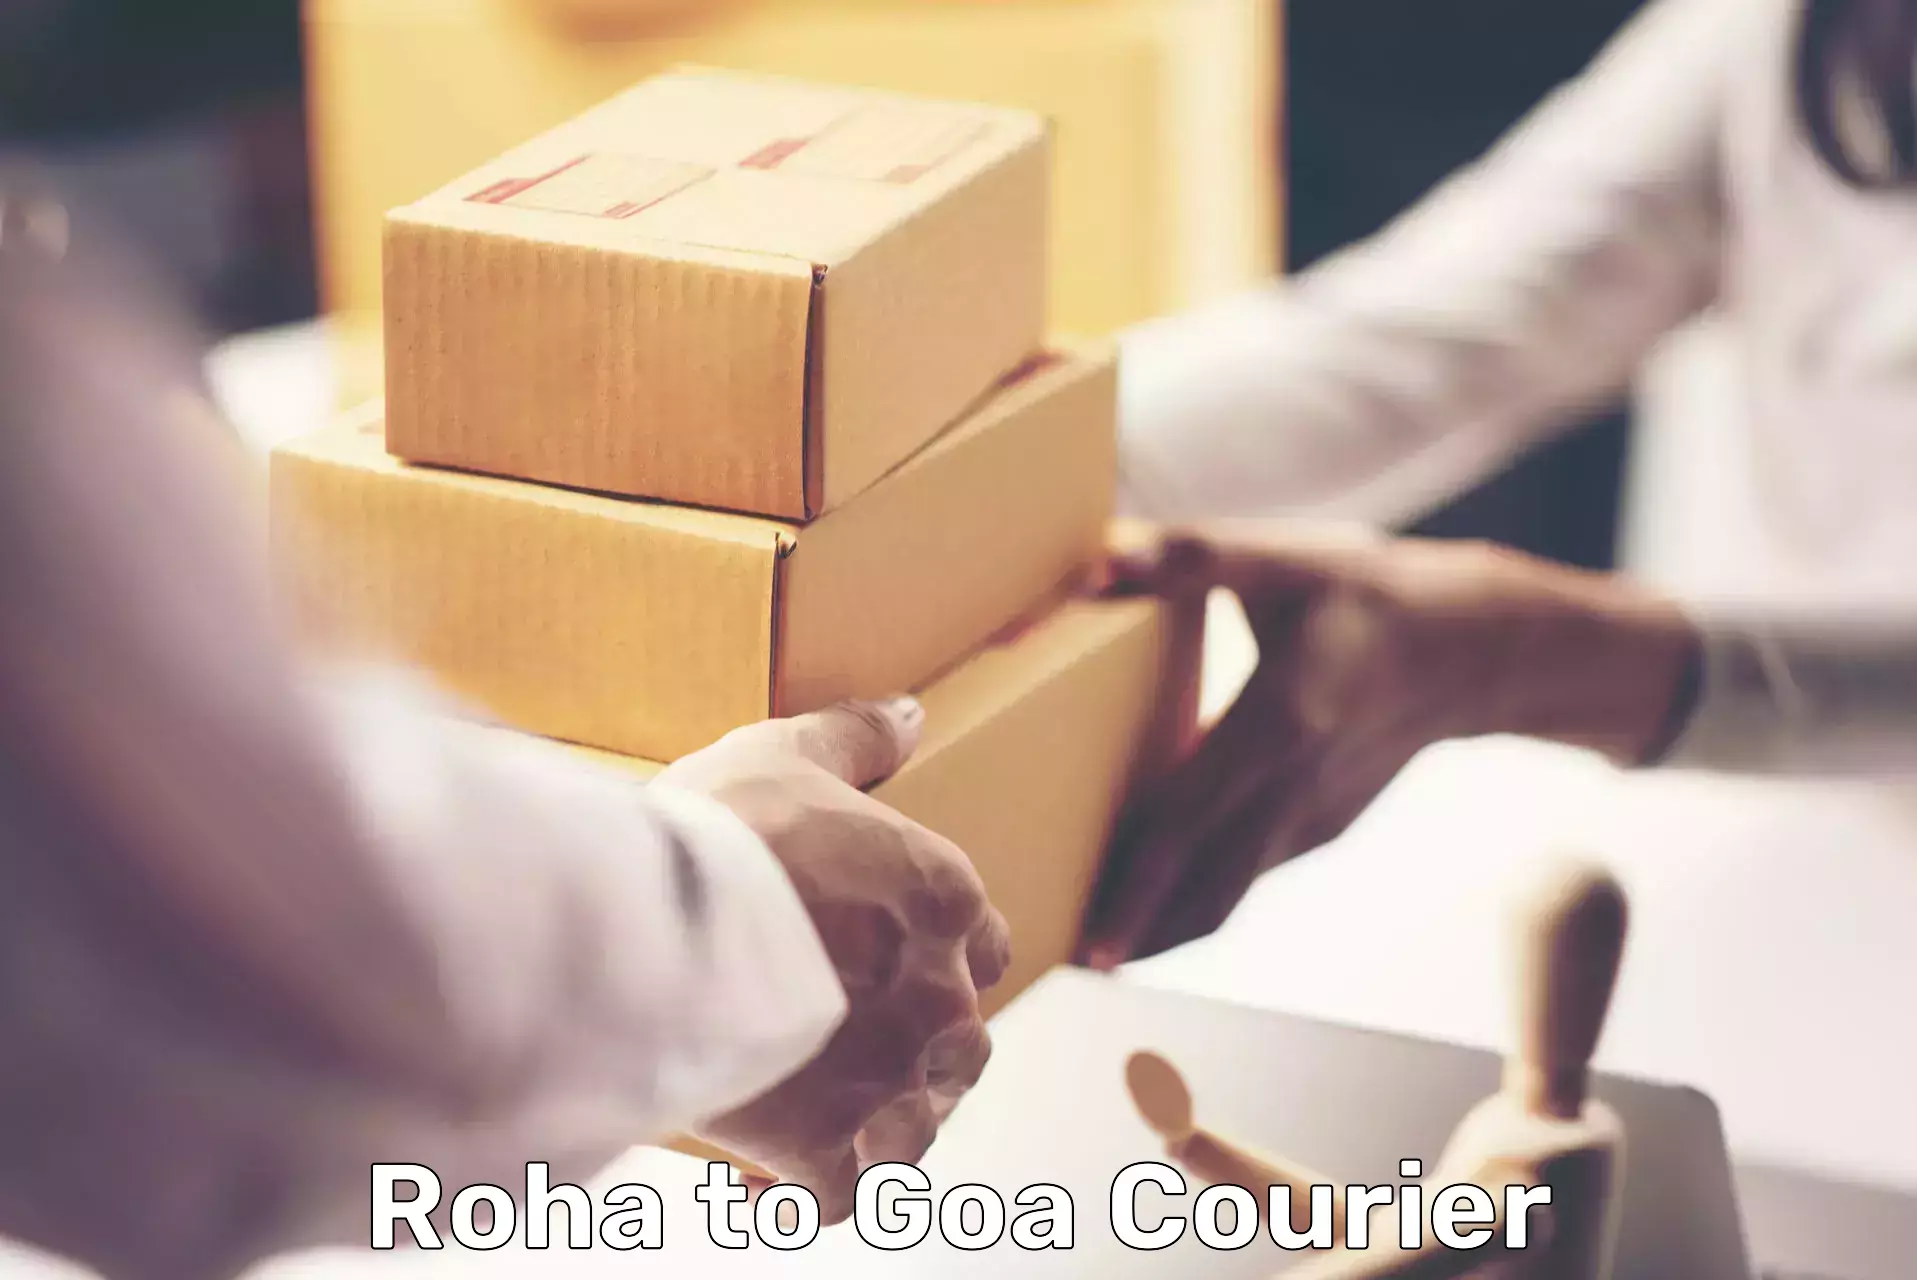 User-friendly delivery service Roha to Goa